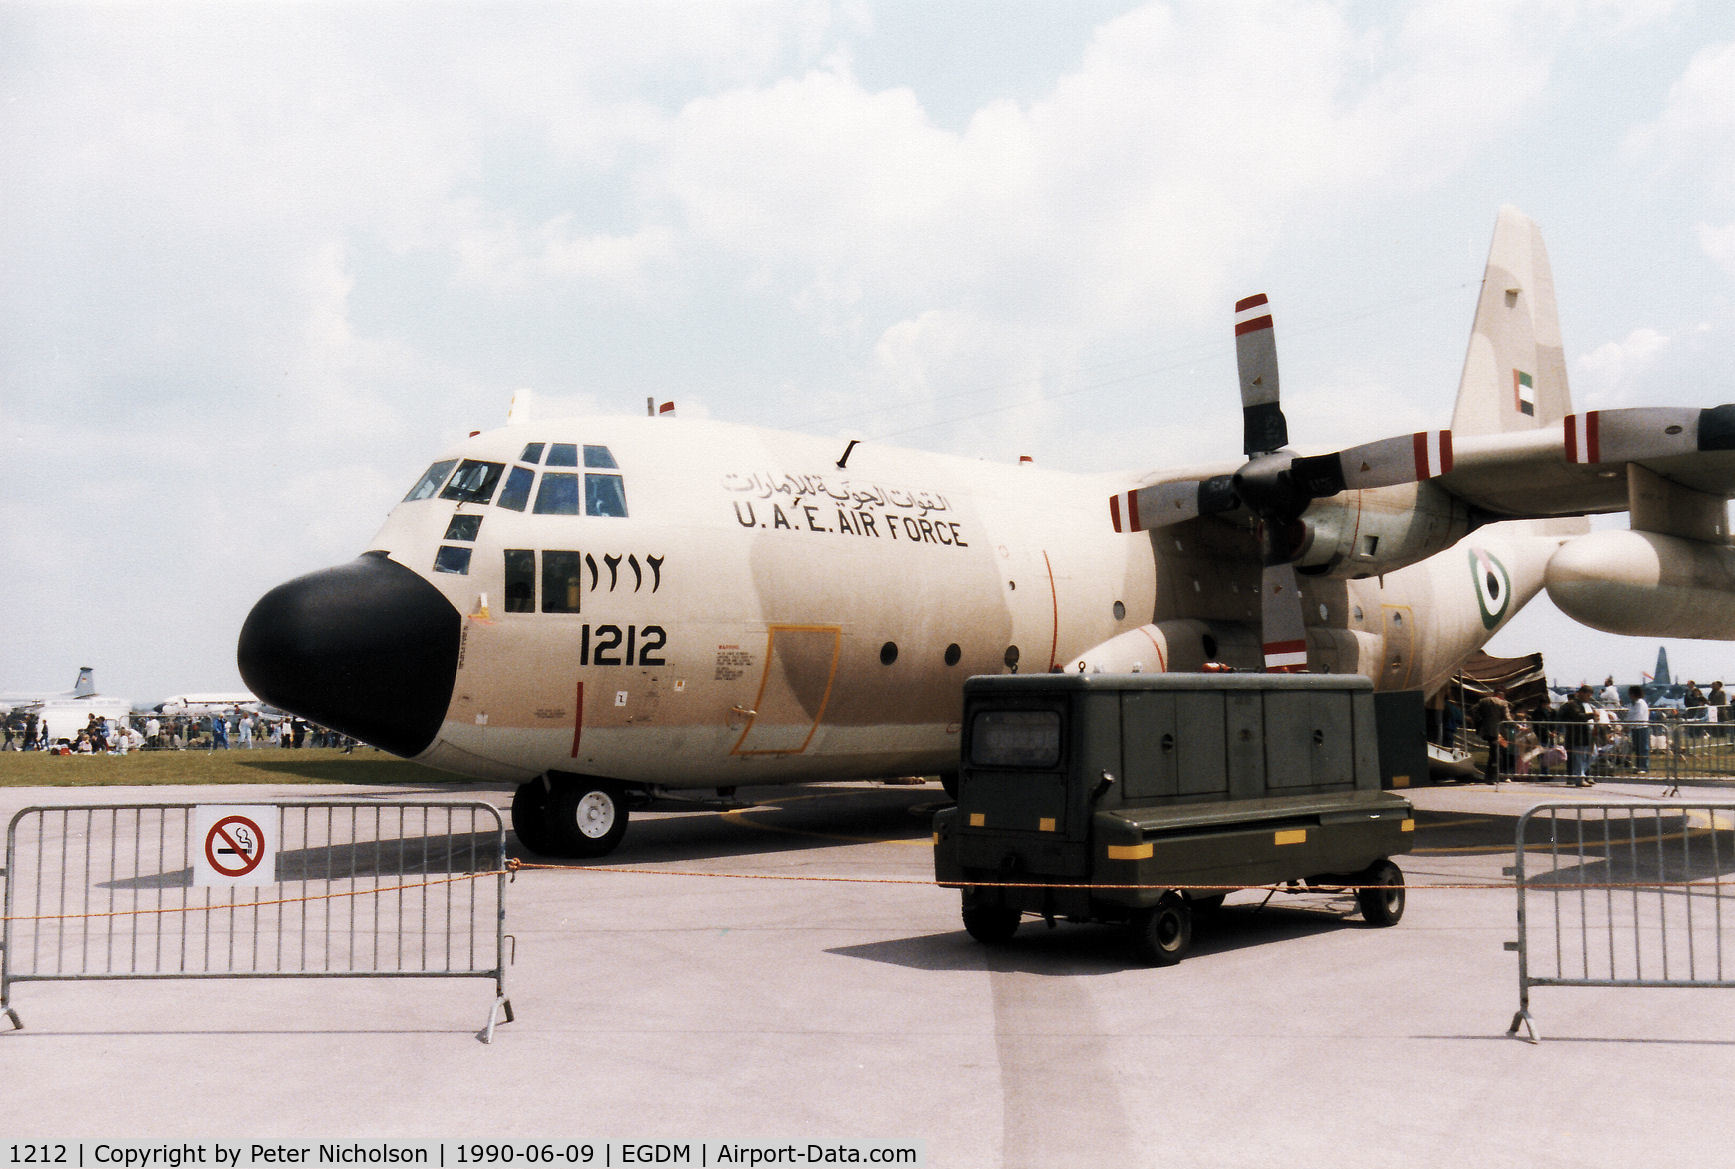 1212, 1984 Lockheed C-130H Hercules C/N 382-4985, C-130H Hercules, callsign Uniforce 1212, of the United Emirates Air Force on display at the 1990 Boscombe Down Battle of Britain 50th Anniversary Airshow.